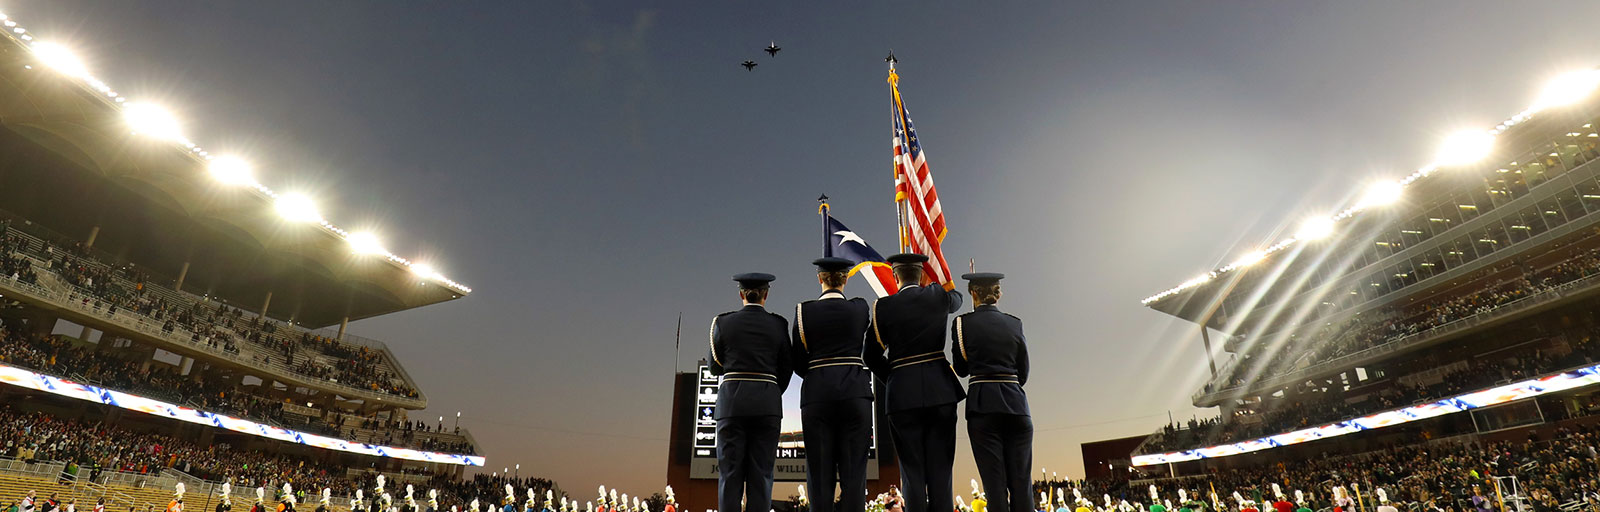 Air-Force Baylor Presenting flag at football game